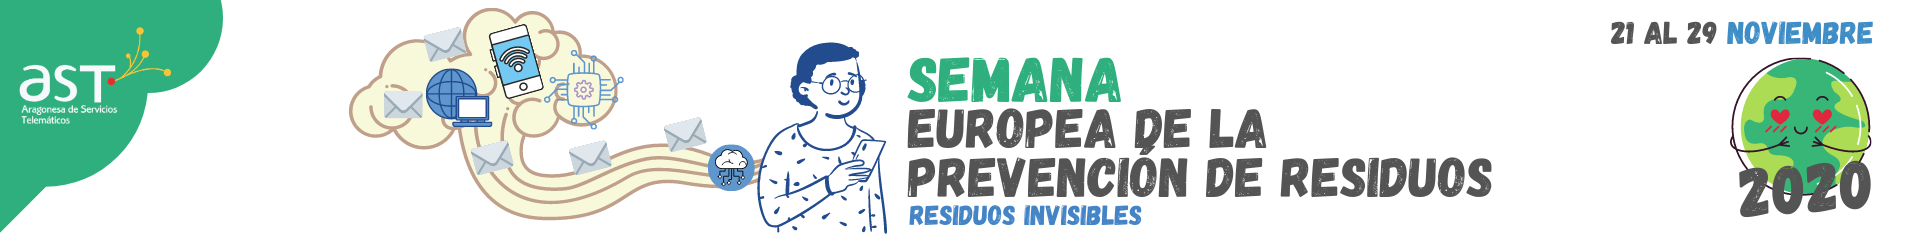 Imagen de ¡Residuos invisibles! Semana europea de la prevención de residuos 2020